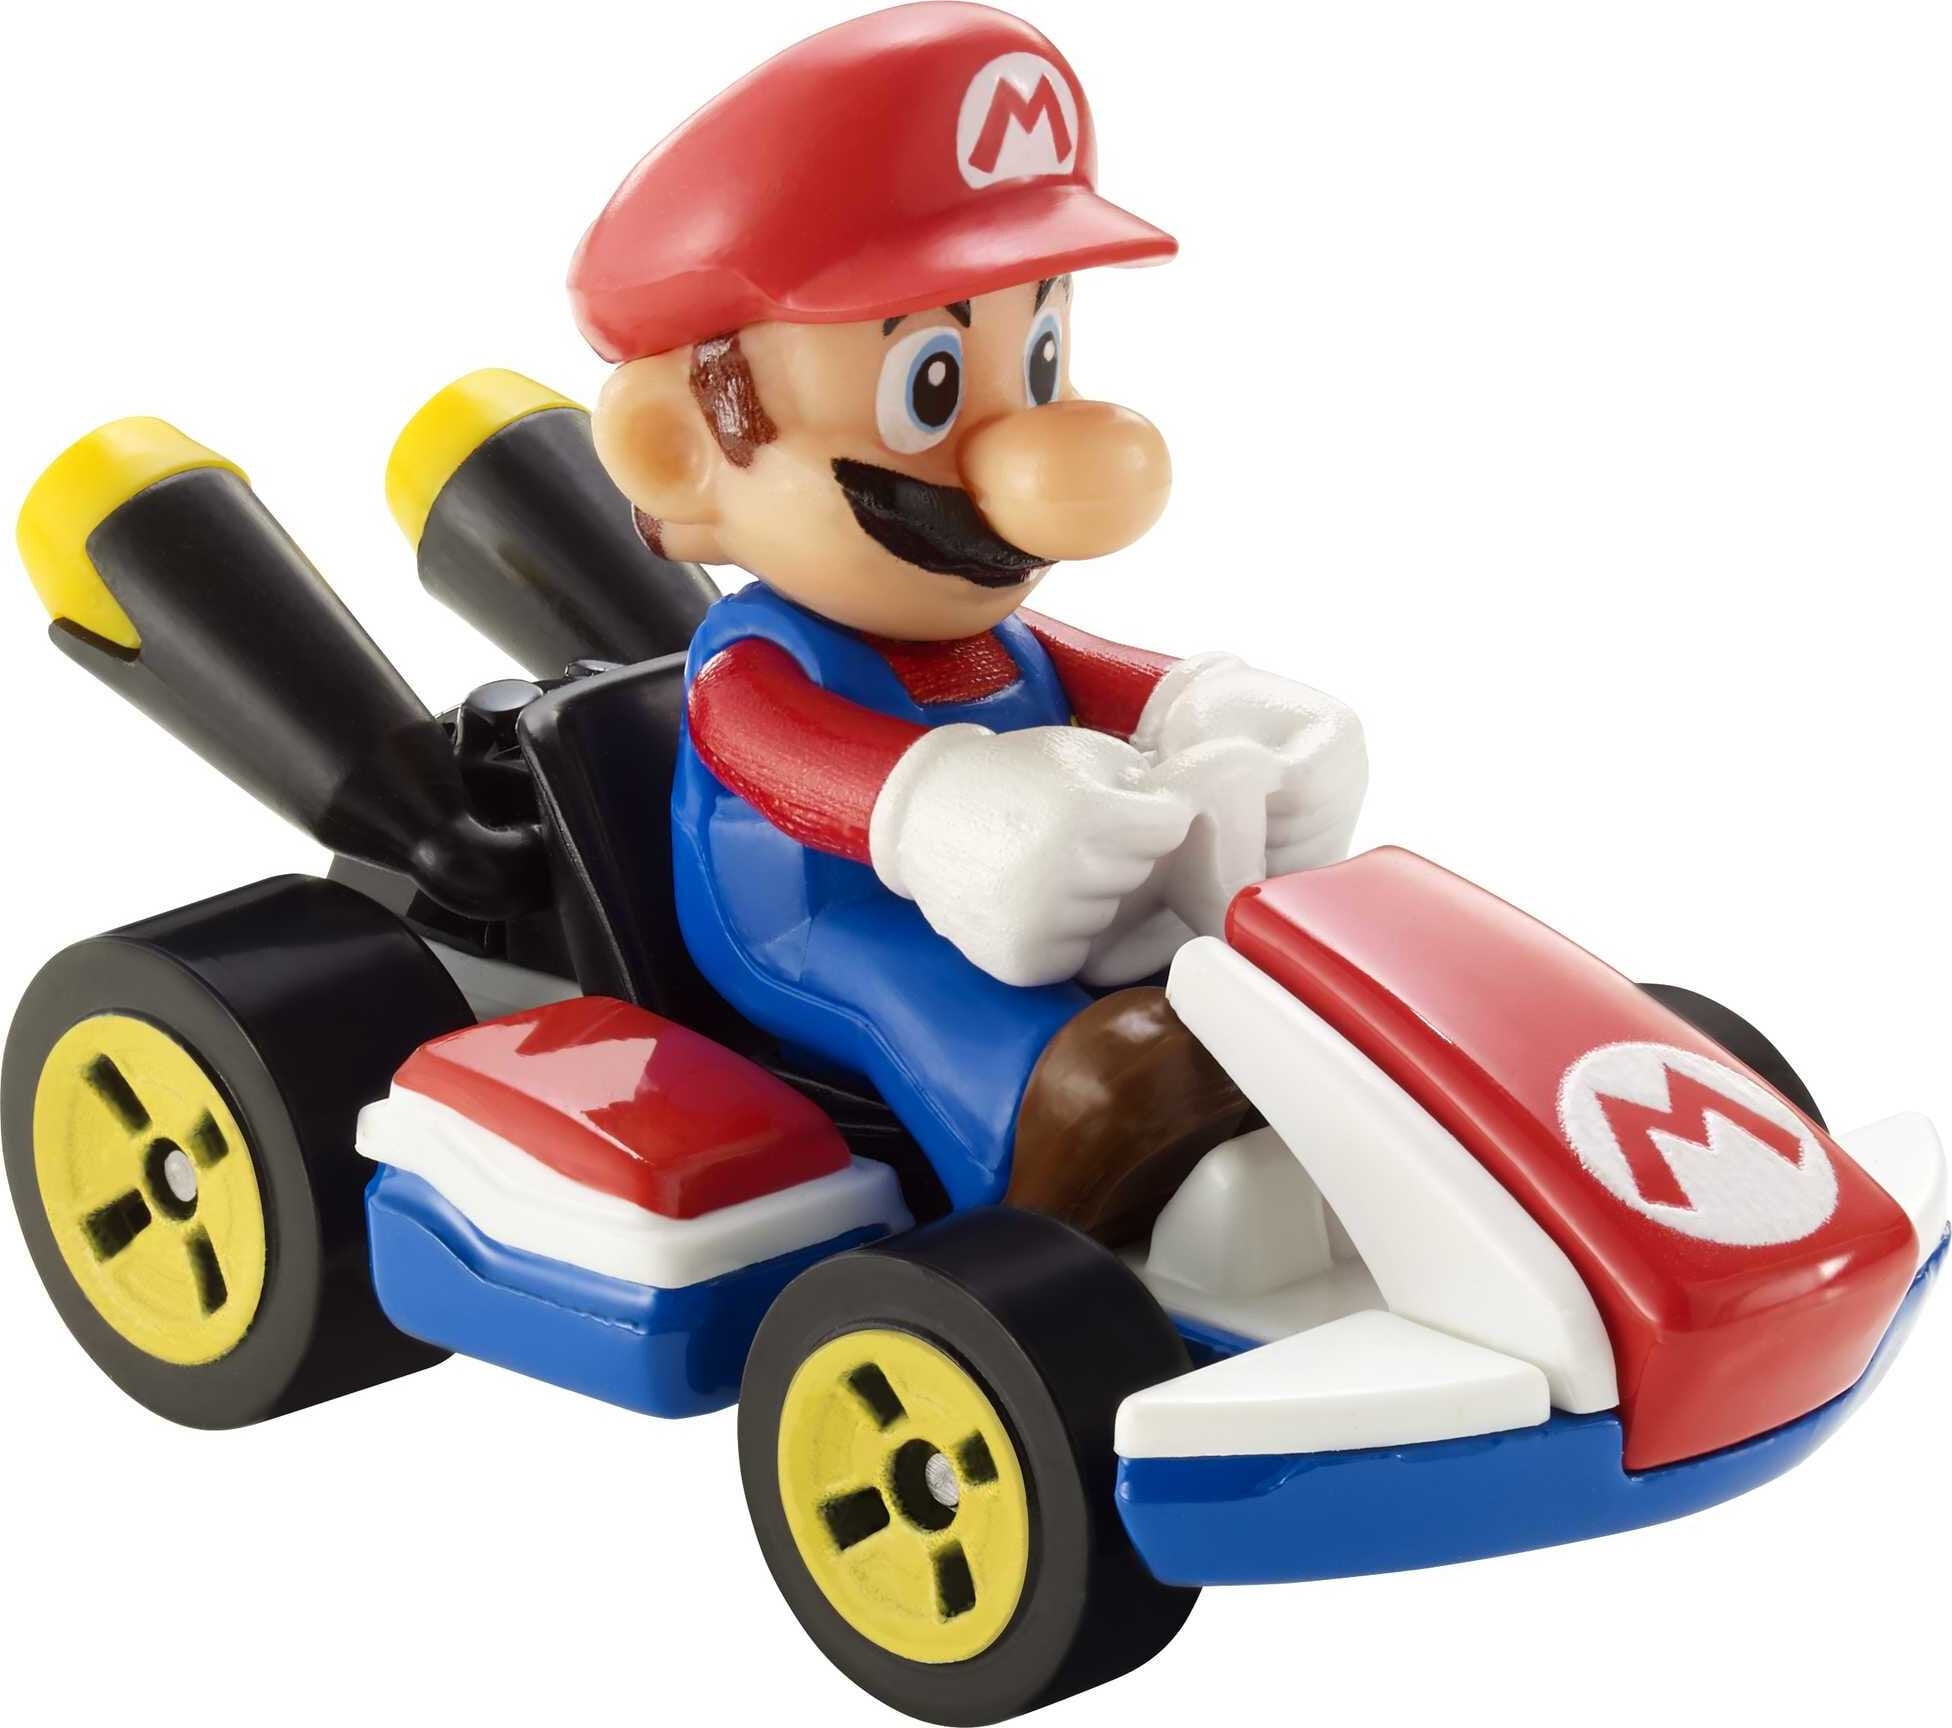 Hot Wheels Mario Kart Mario Standard Kart Vehicle